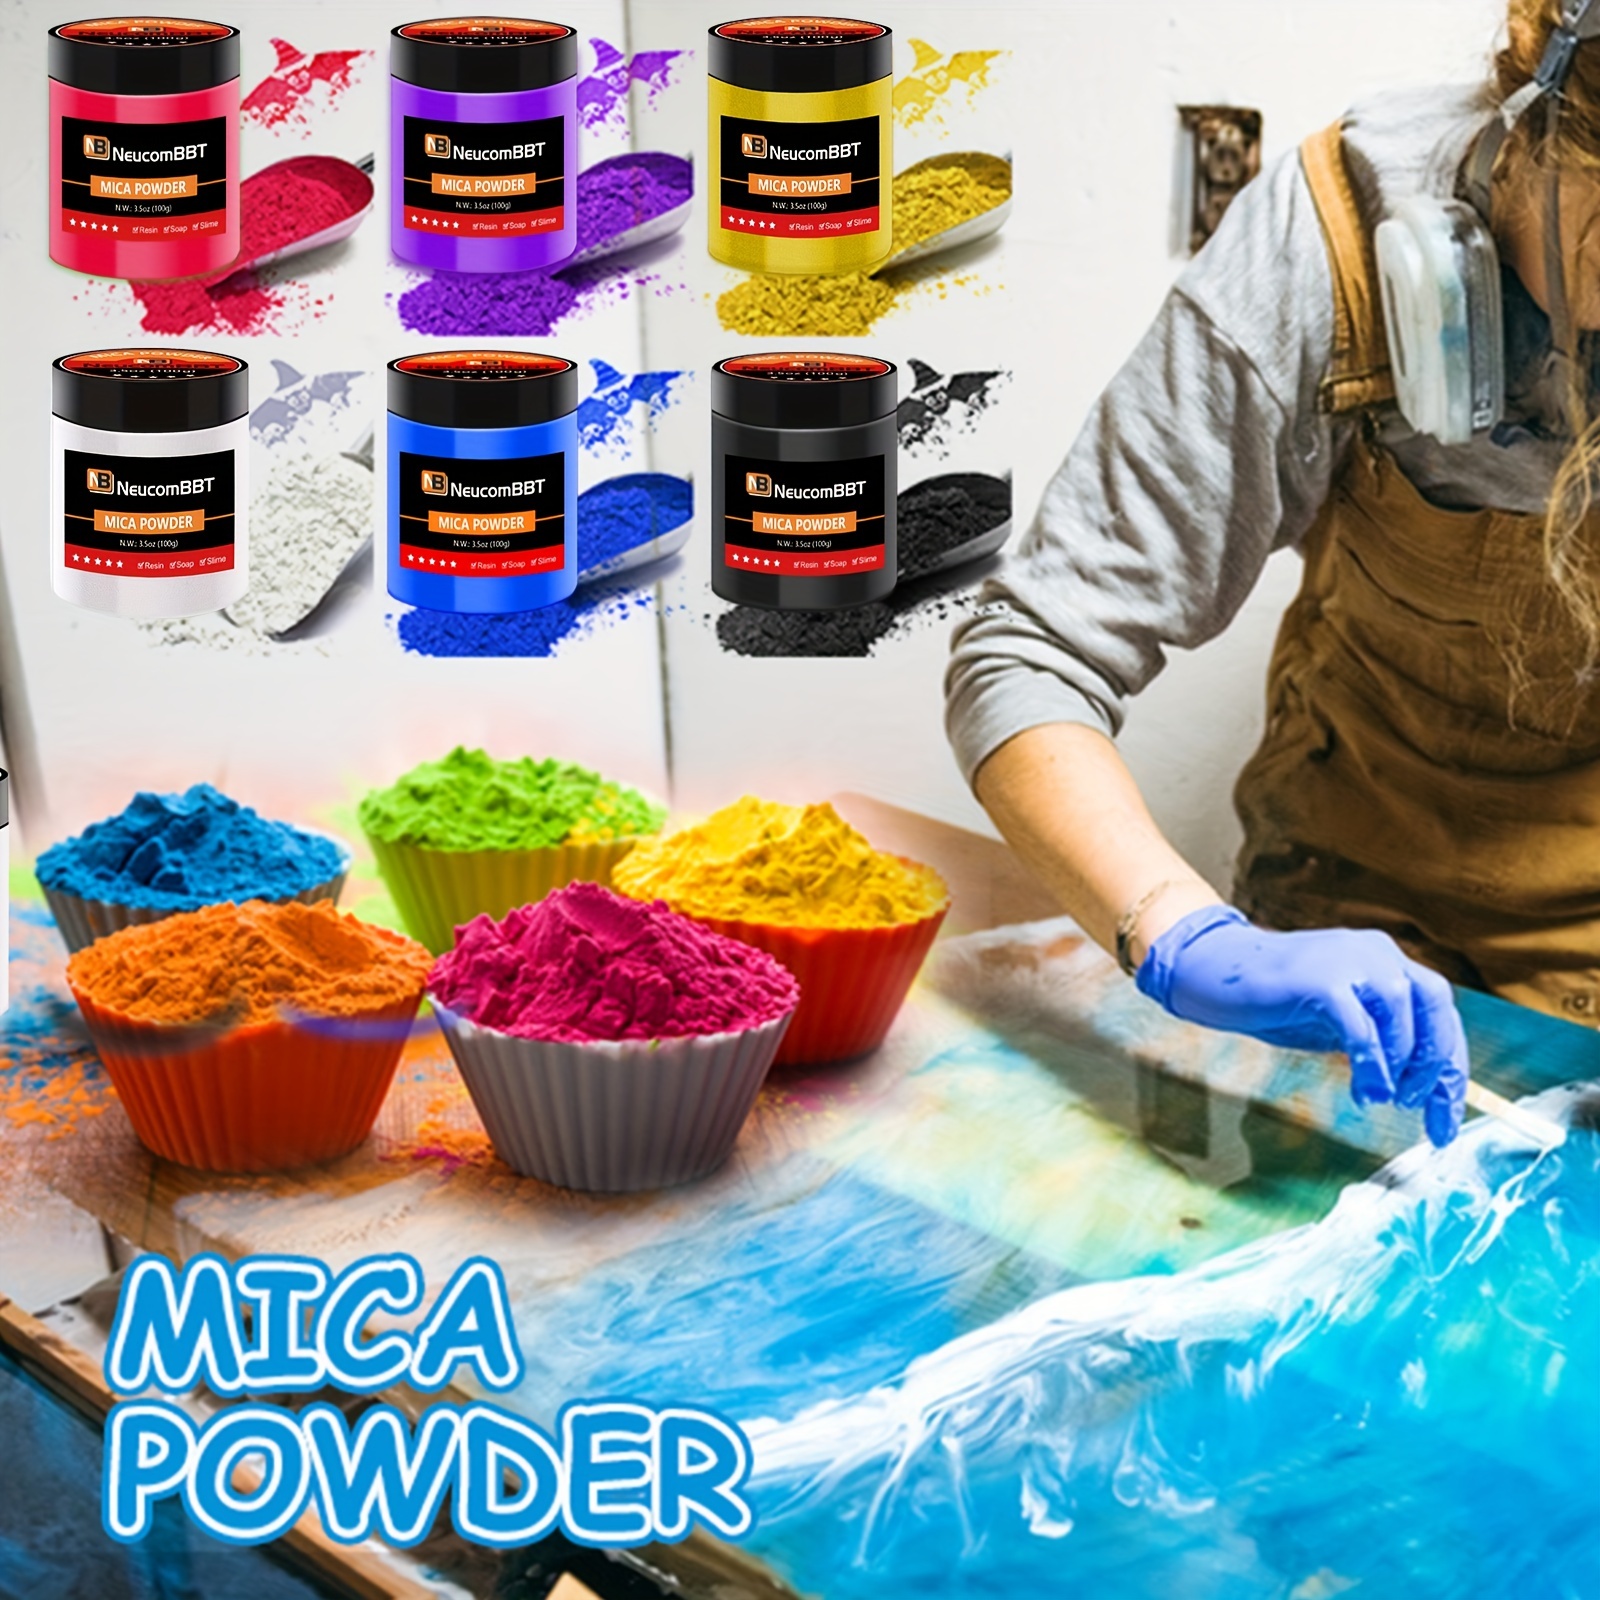 Azure Blue Mica Powder for Epoxy Resin, Soap Making, Lipgloss 2oz Jar